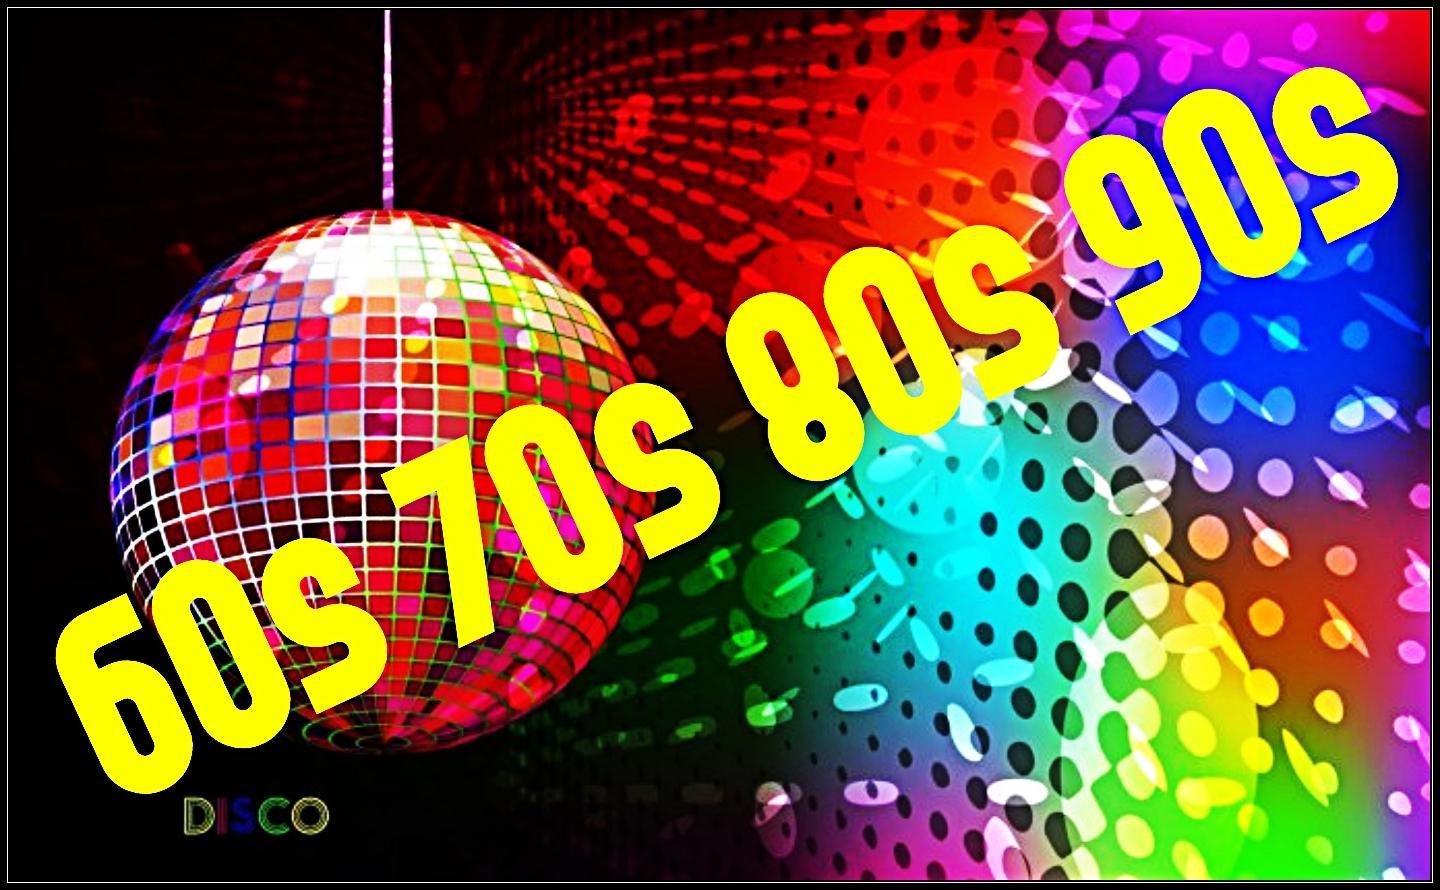 Сценка дискотека 80 х. Фон дискотека 80-х. Диско 80-90. Объявление дискотека 80-х. Ретро дискотека 80.